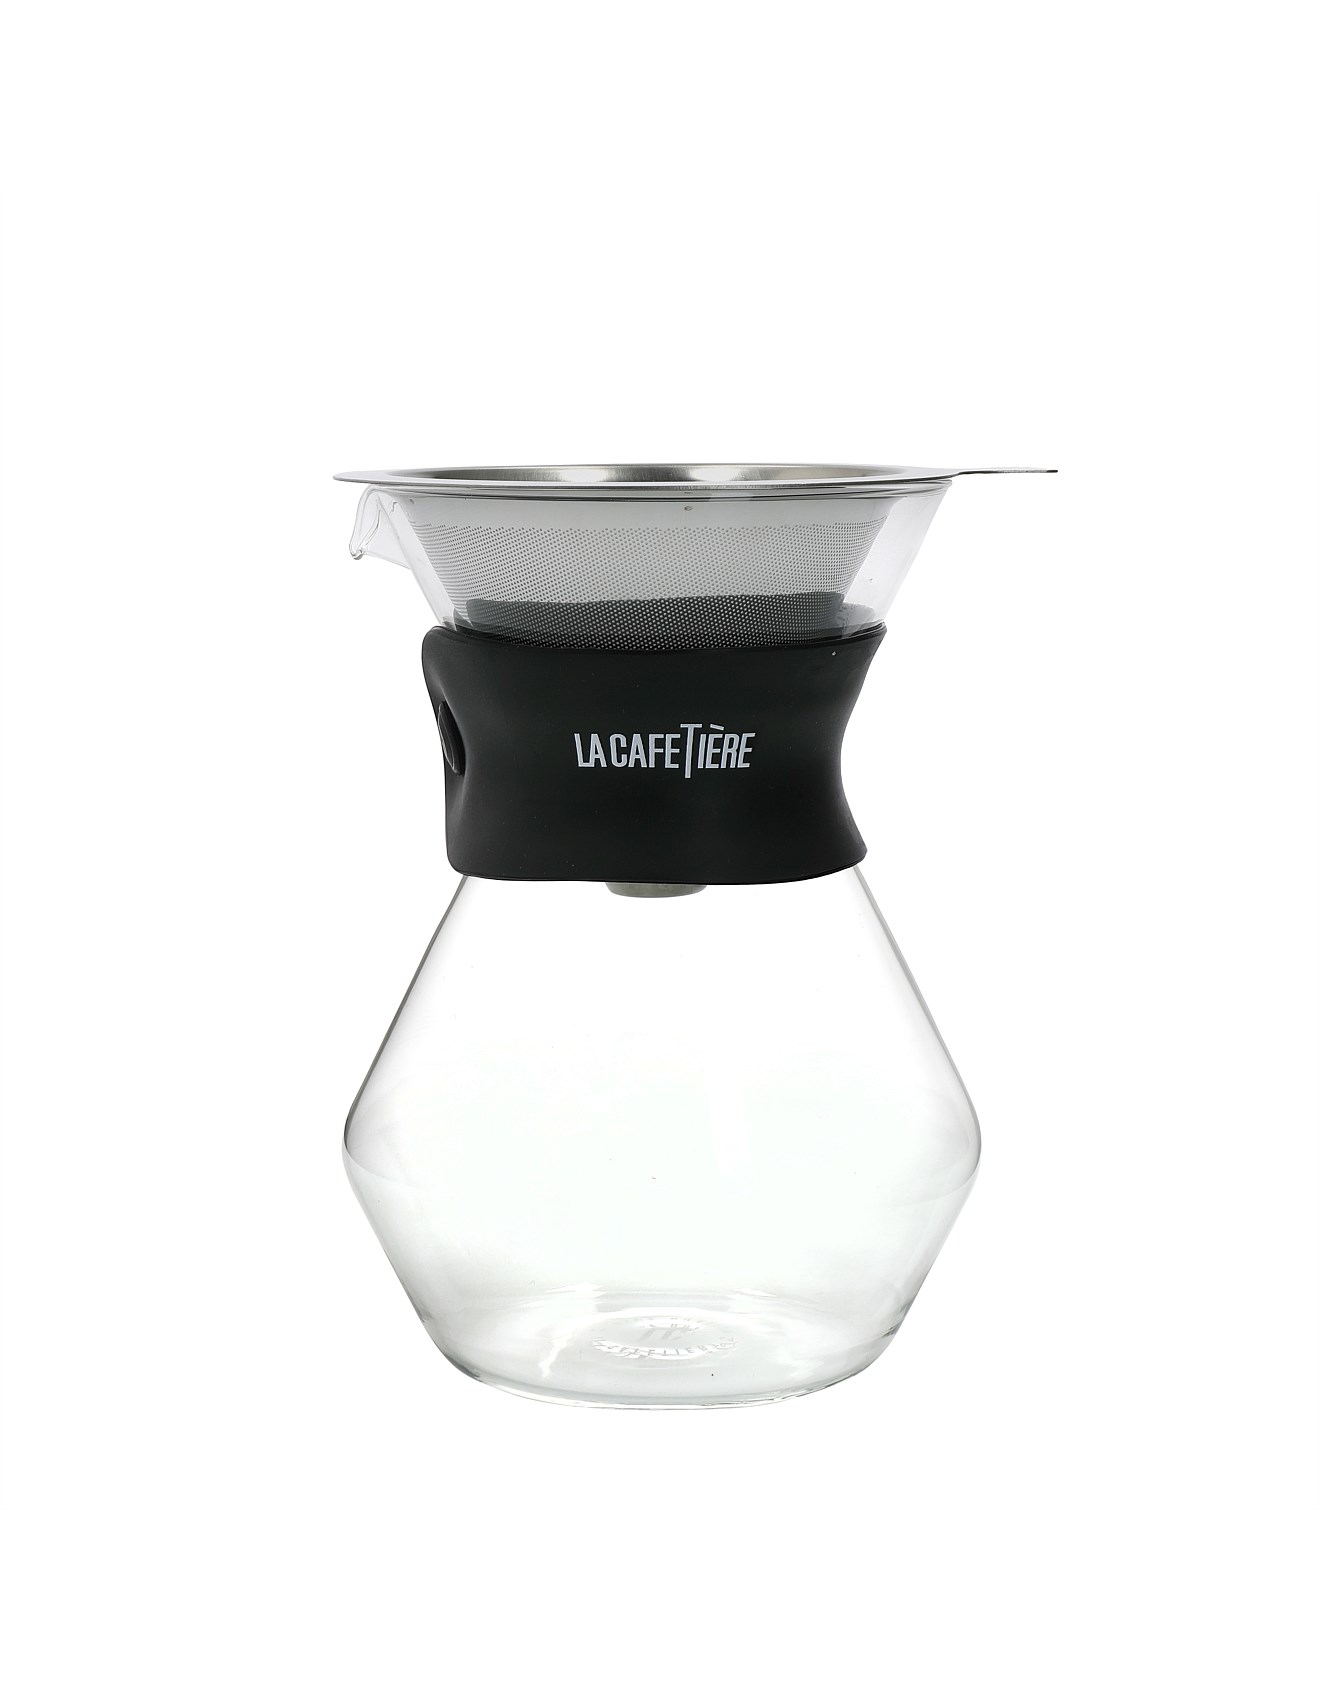 La Cafetiere Glass carafe coffee dripper 3 cup 400ml